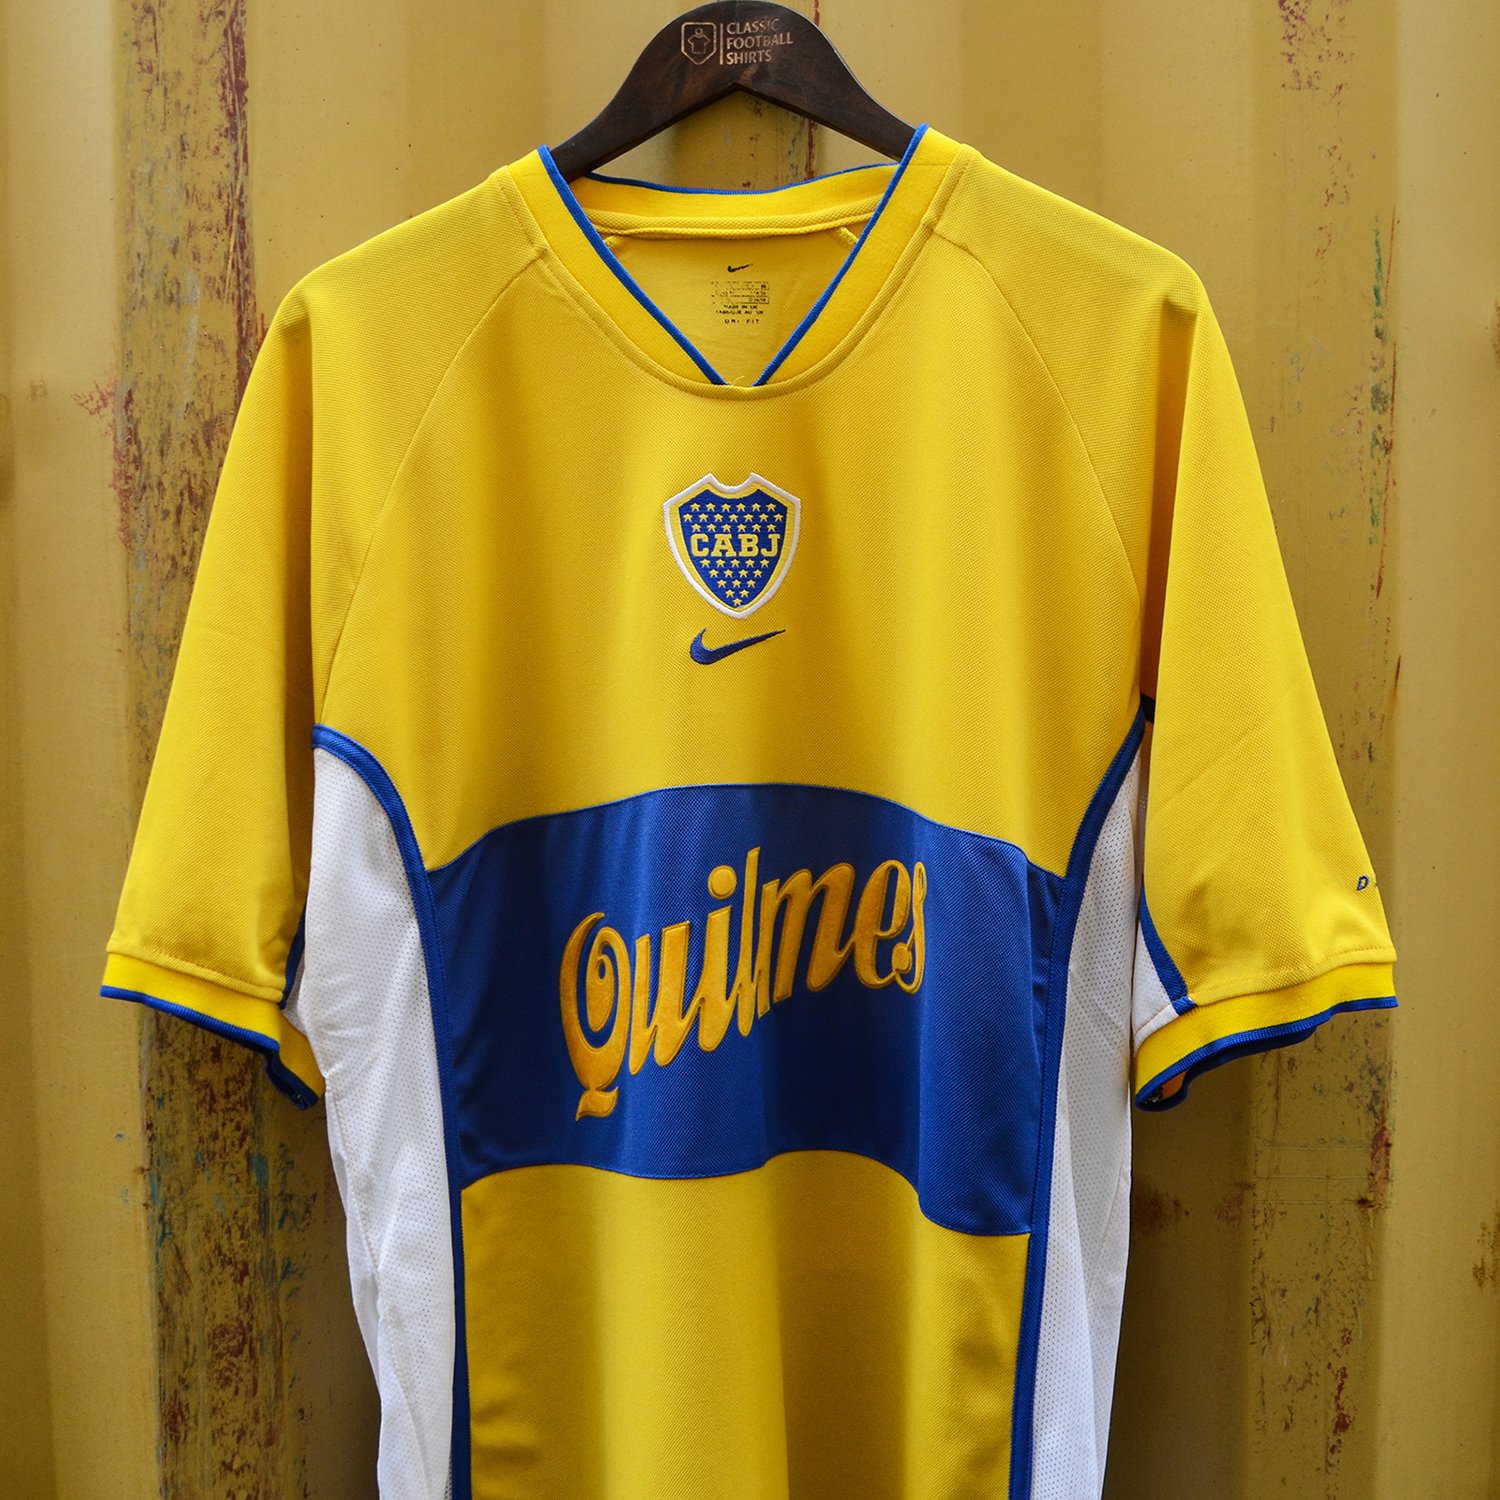 Classic Football Shirts on Twitter: "Boca Juniors 2001 away Shop classic Boca here https://t.co/6iyAIgbEFZ https://t.co/4crT2opNY6" / Twitter